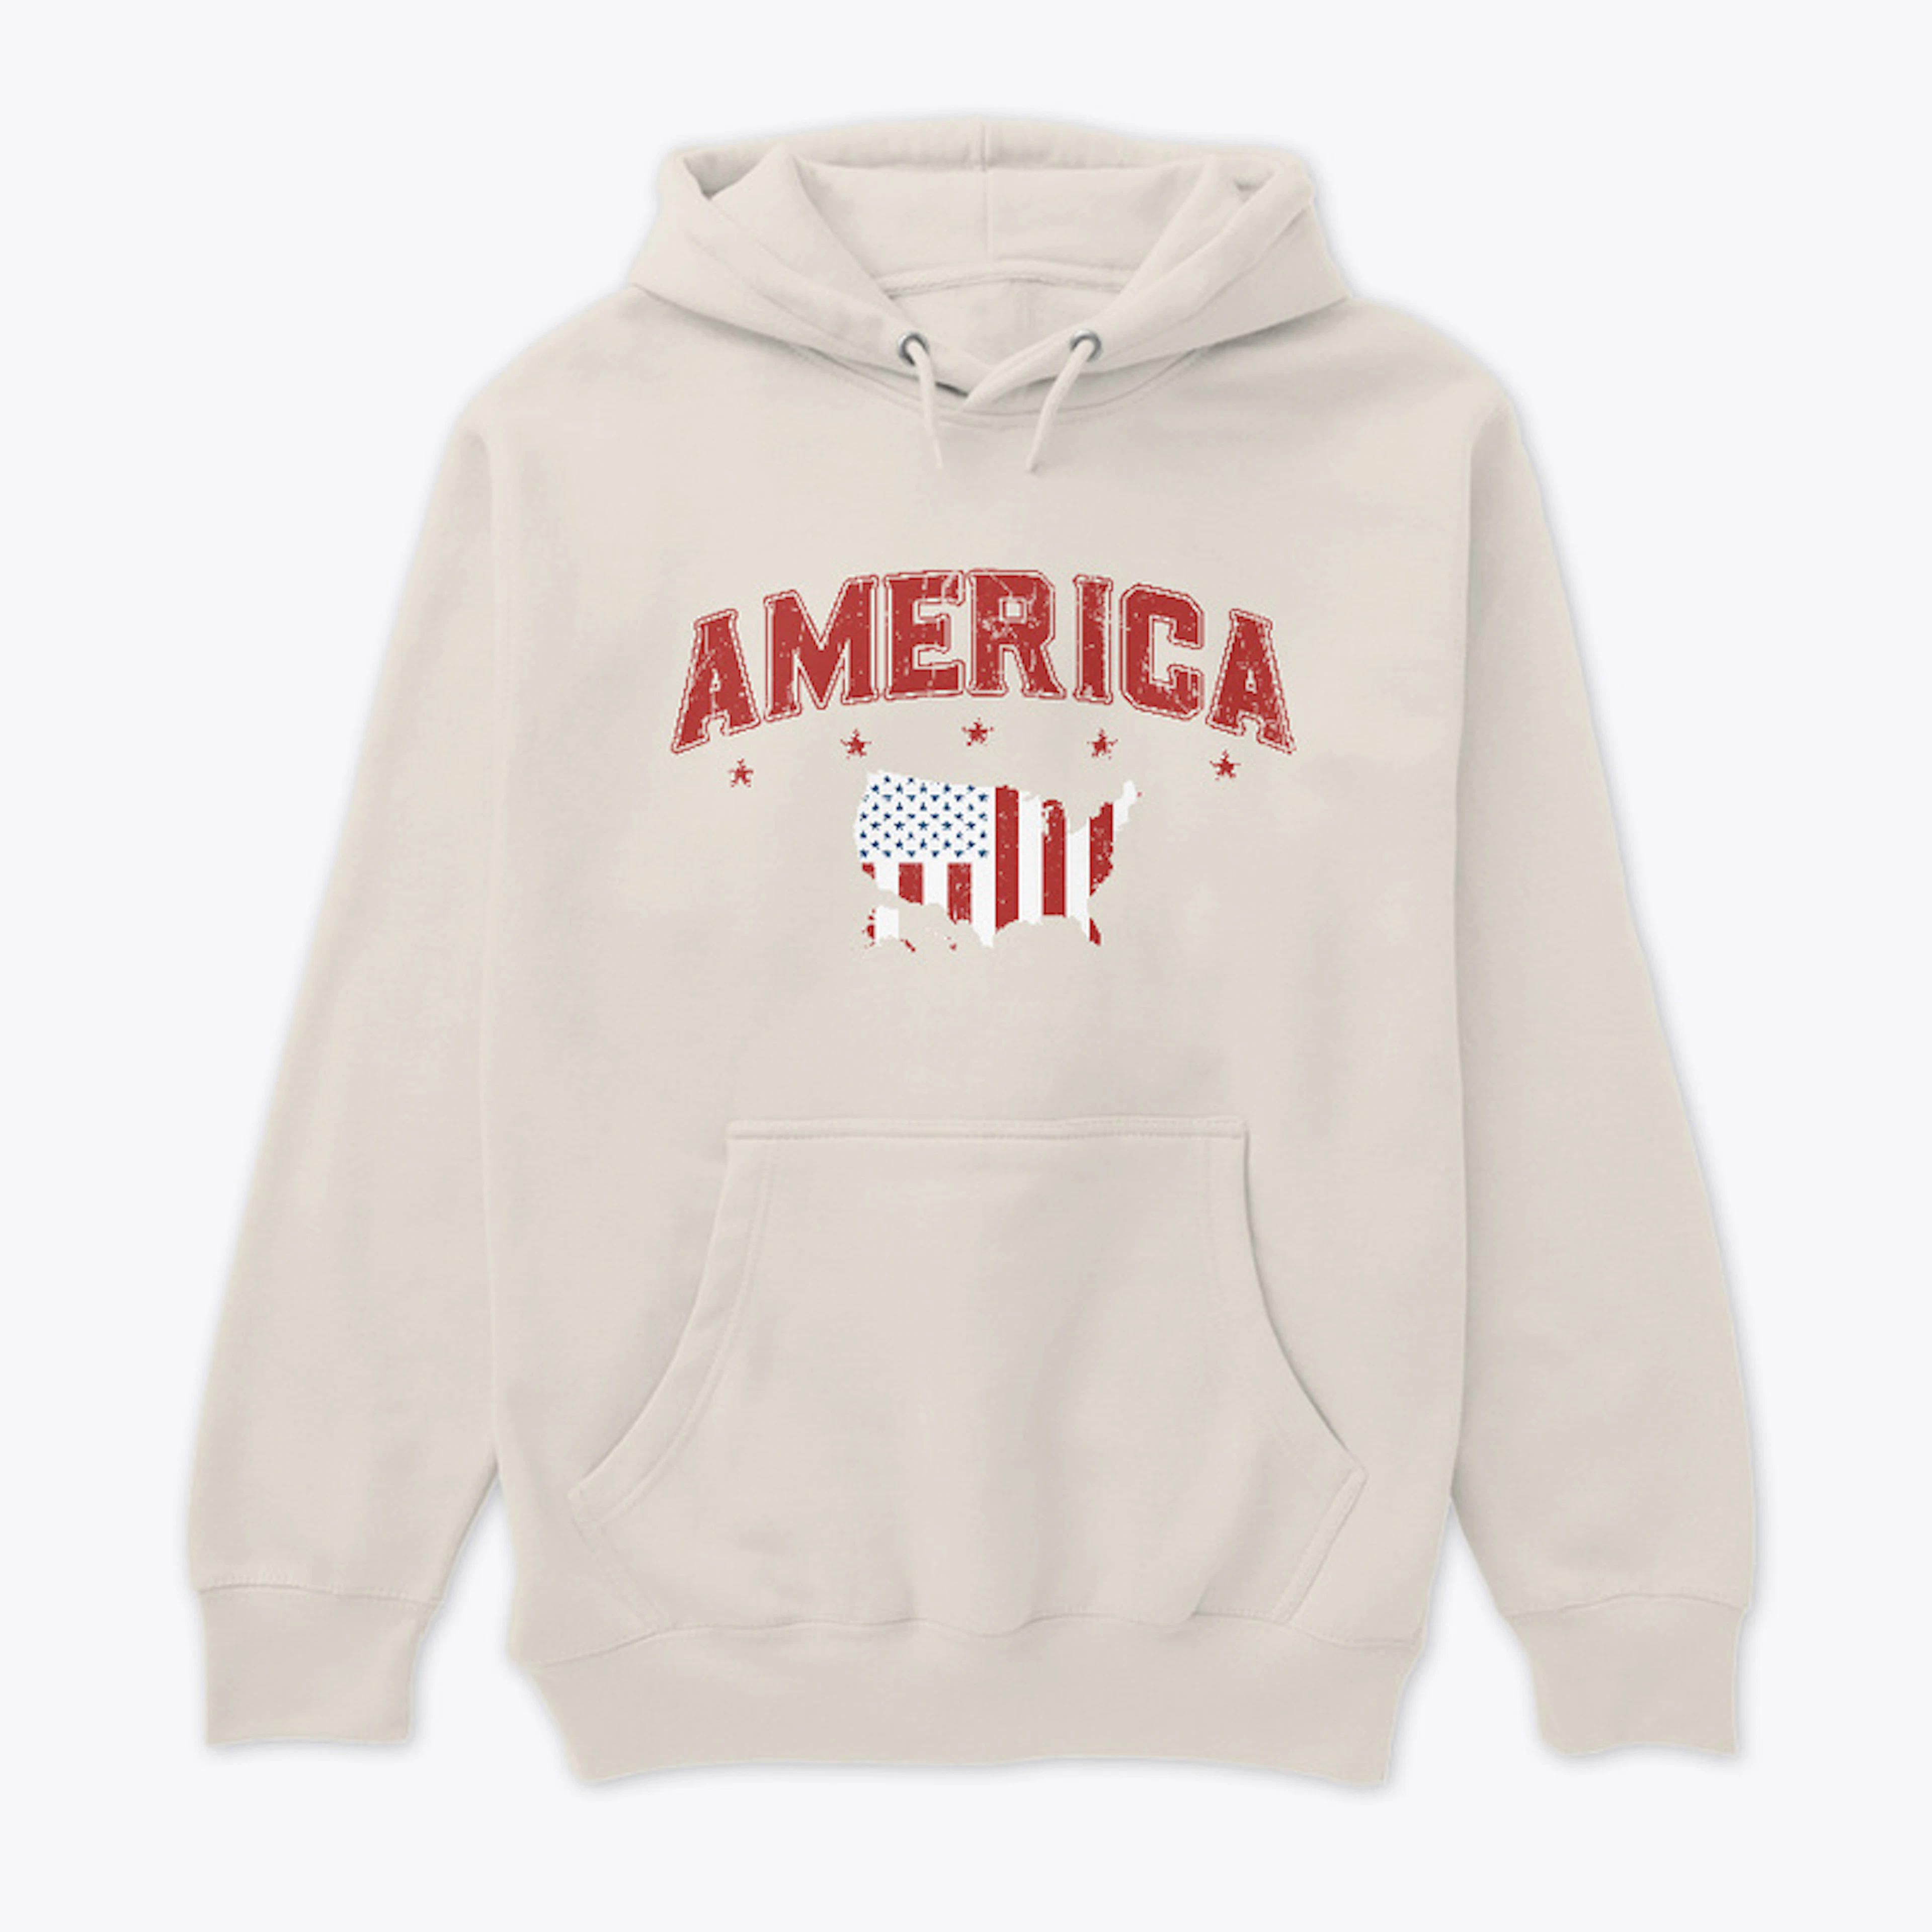 America Peacetime Crewneck Sweatshirt